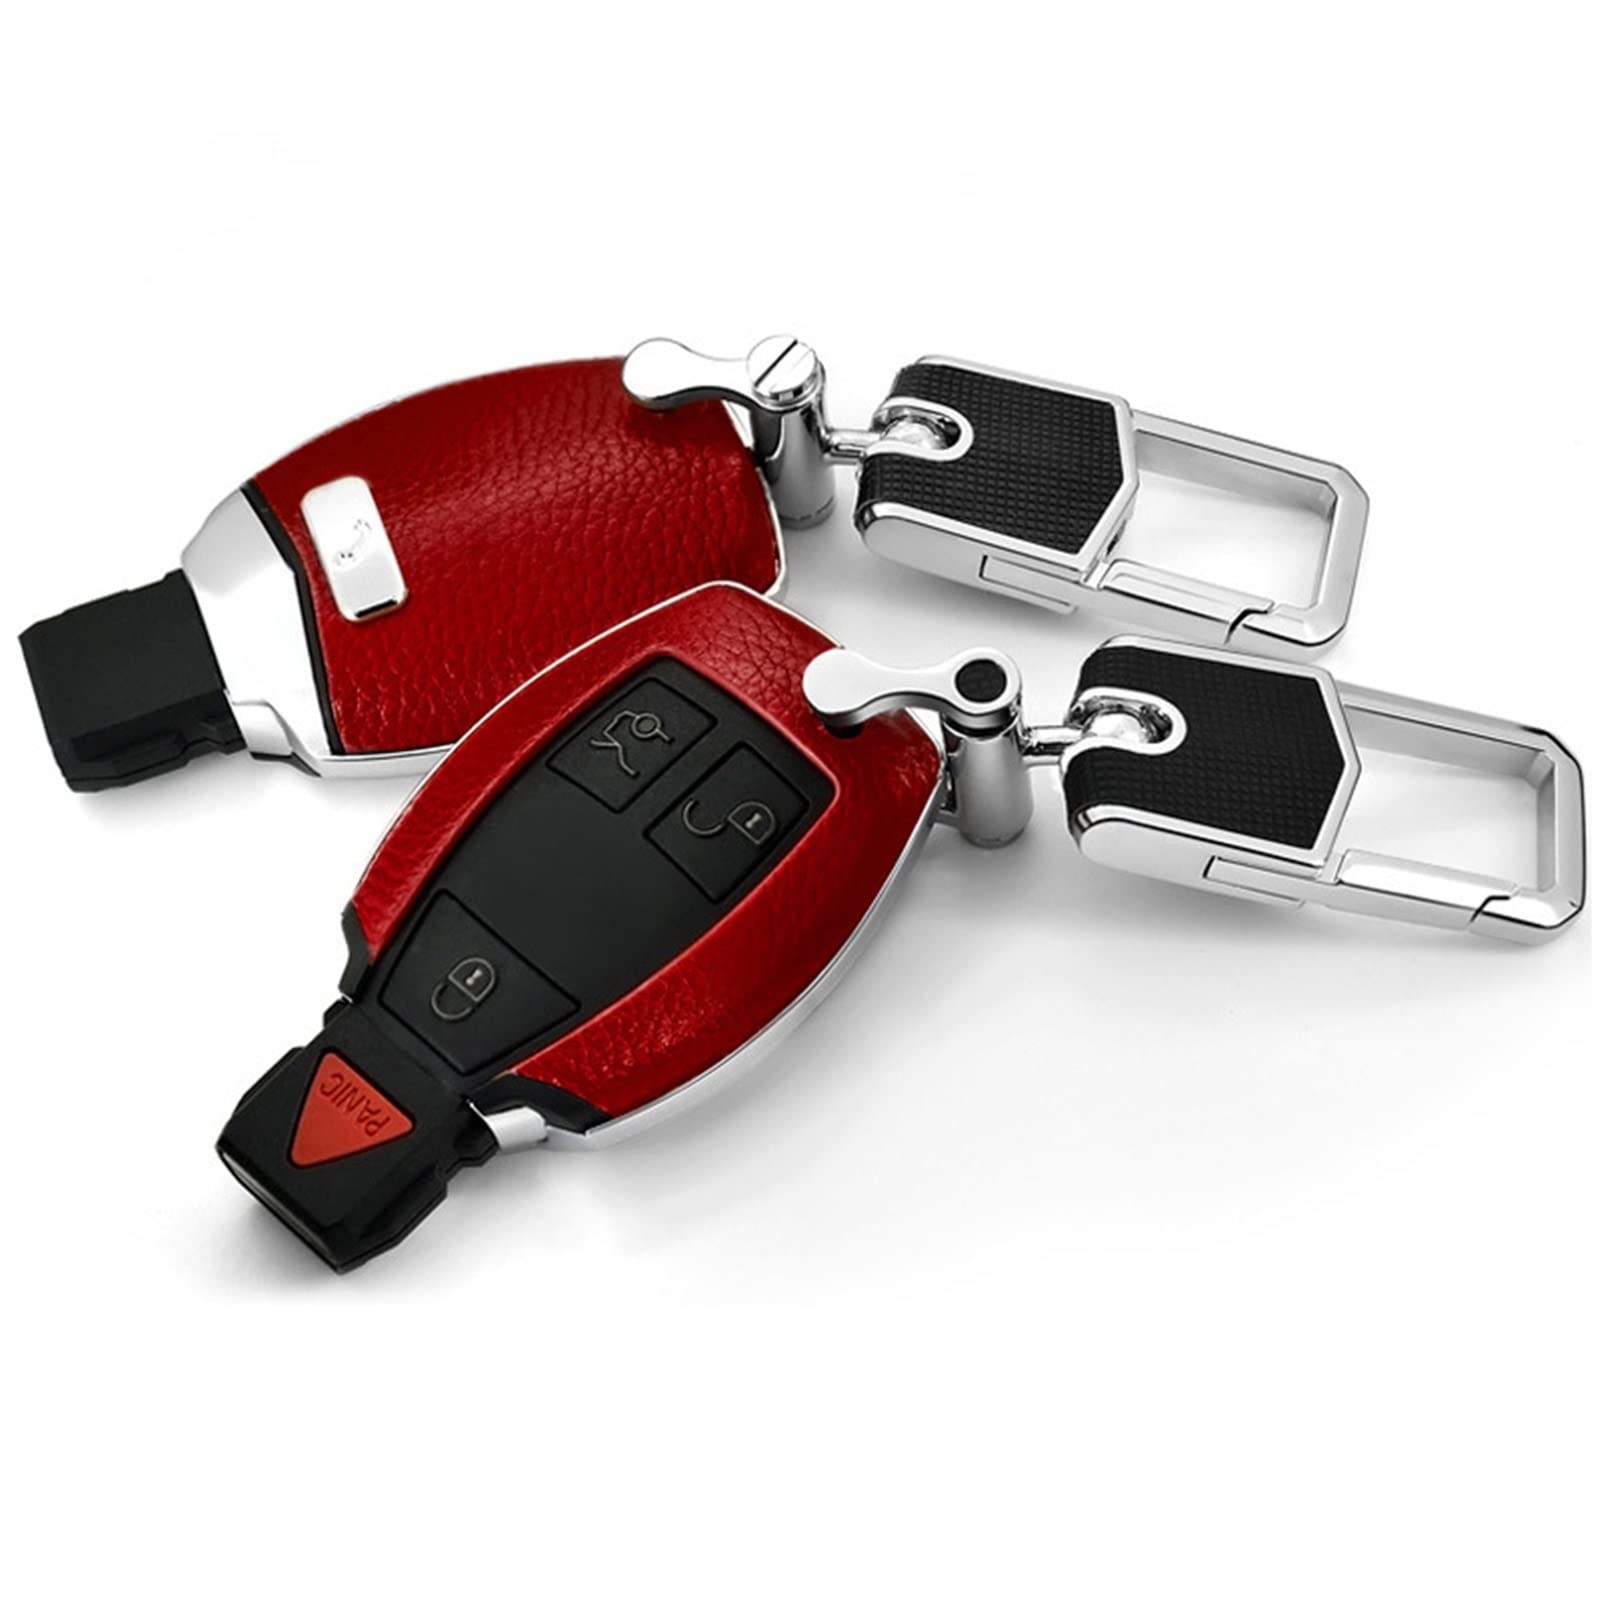 BASIQE AutoschlüSsel Schutz SchlüSselanhäNger Key Shell Holder Remote Car Key Case Cover Für Mercedes Benz W203 W210 W211 CES CLS CLK CLA SLK SchlüSsel Schutz SchlüSseltasche (Farbe : Rot) von BASIQE